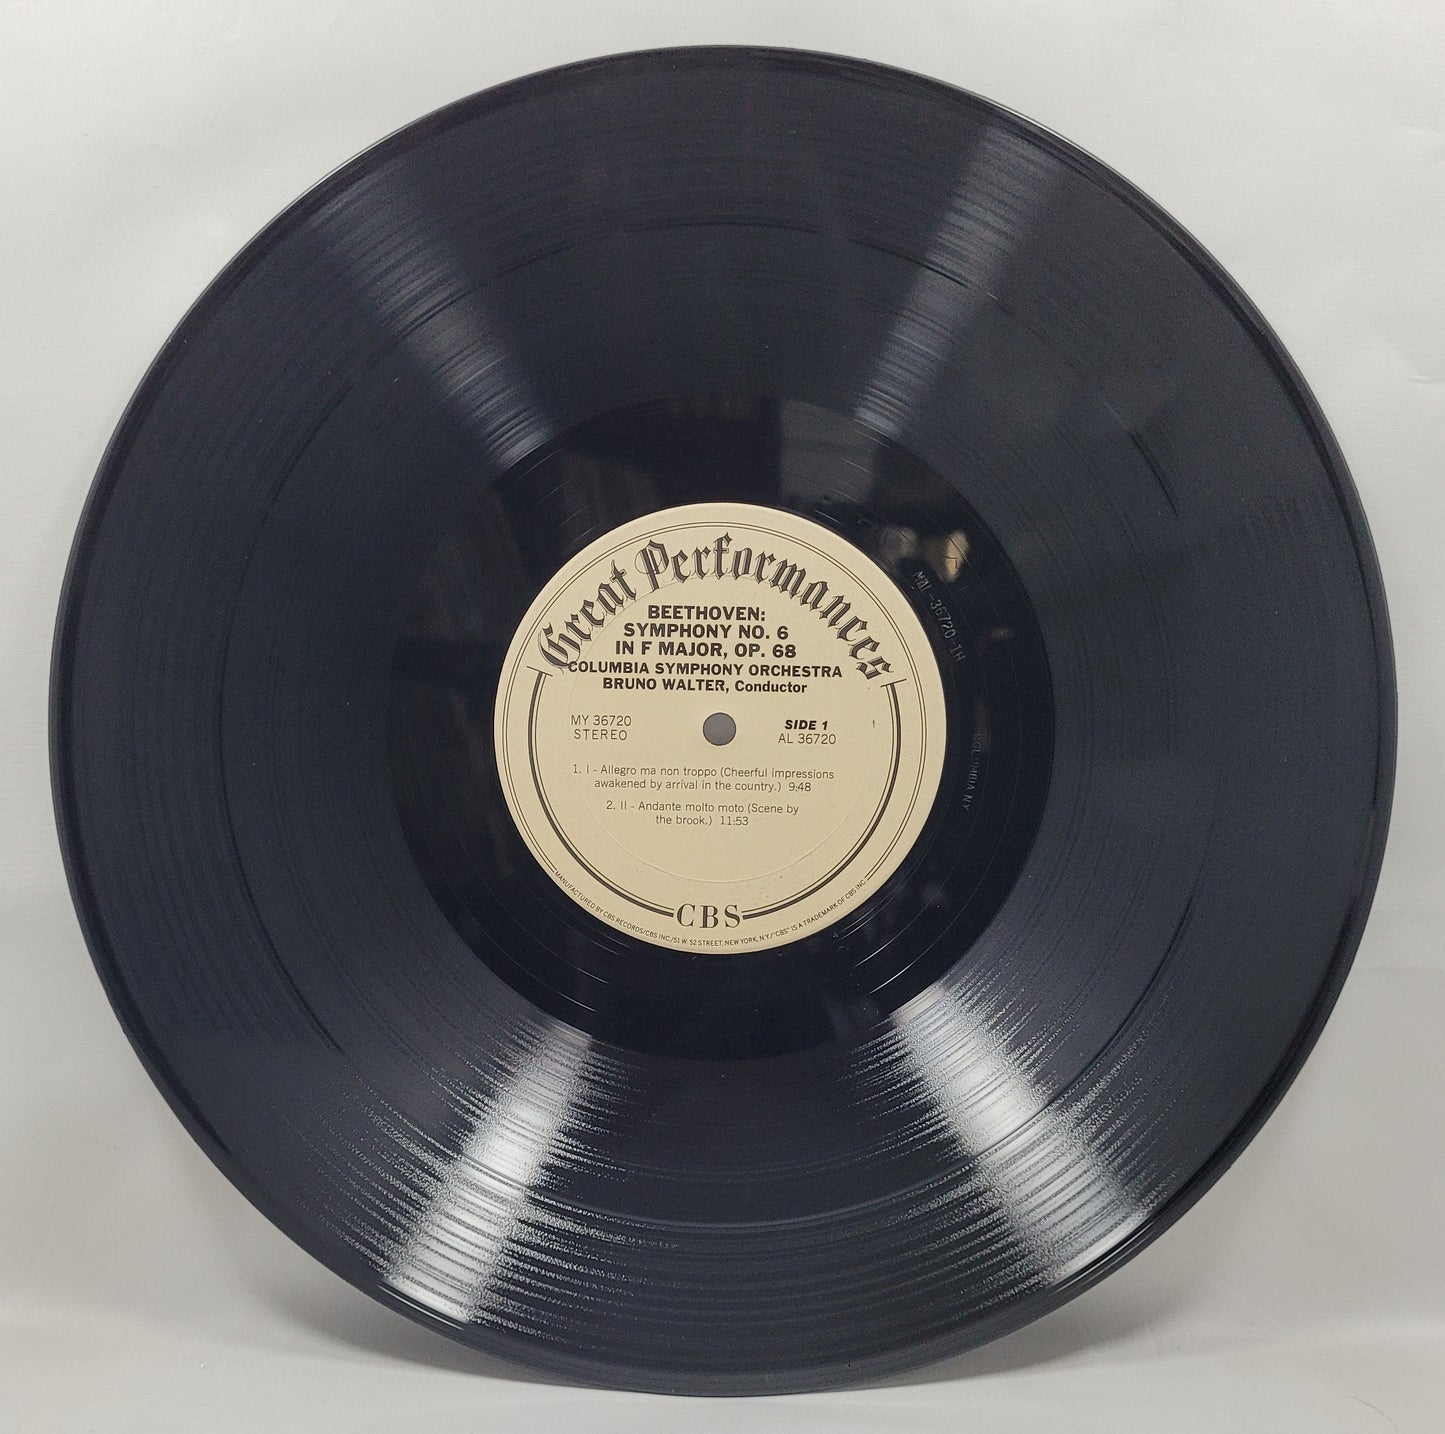 Bruno Walter - Beethoven Symphony No. 6 "Pastorale" [1981 Reissue] [Used Vinyl Record LP]